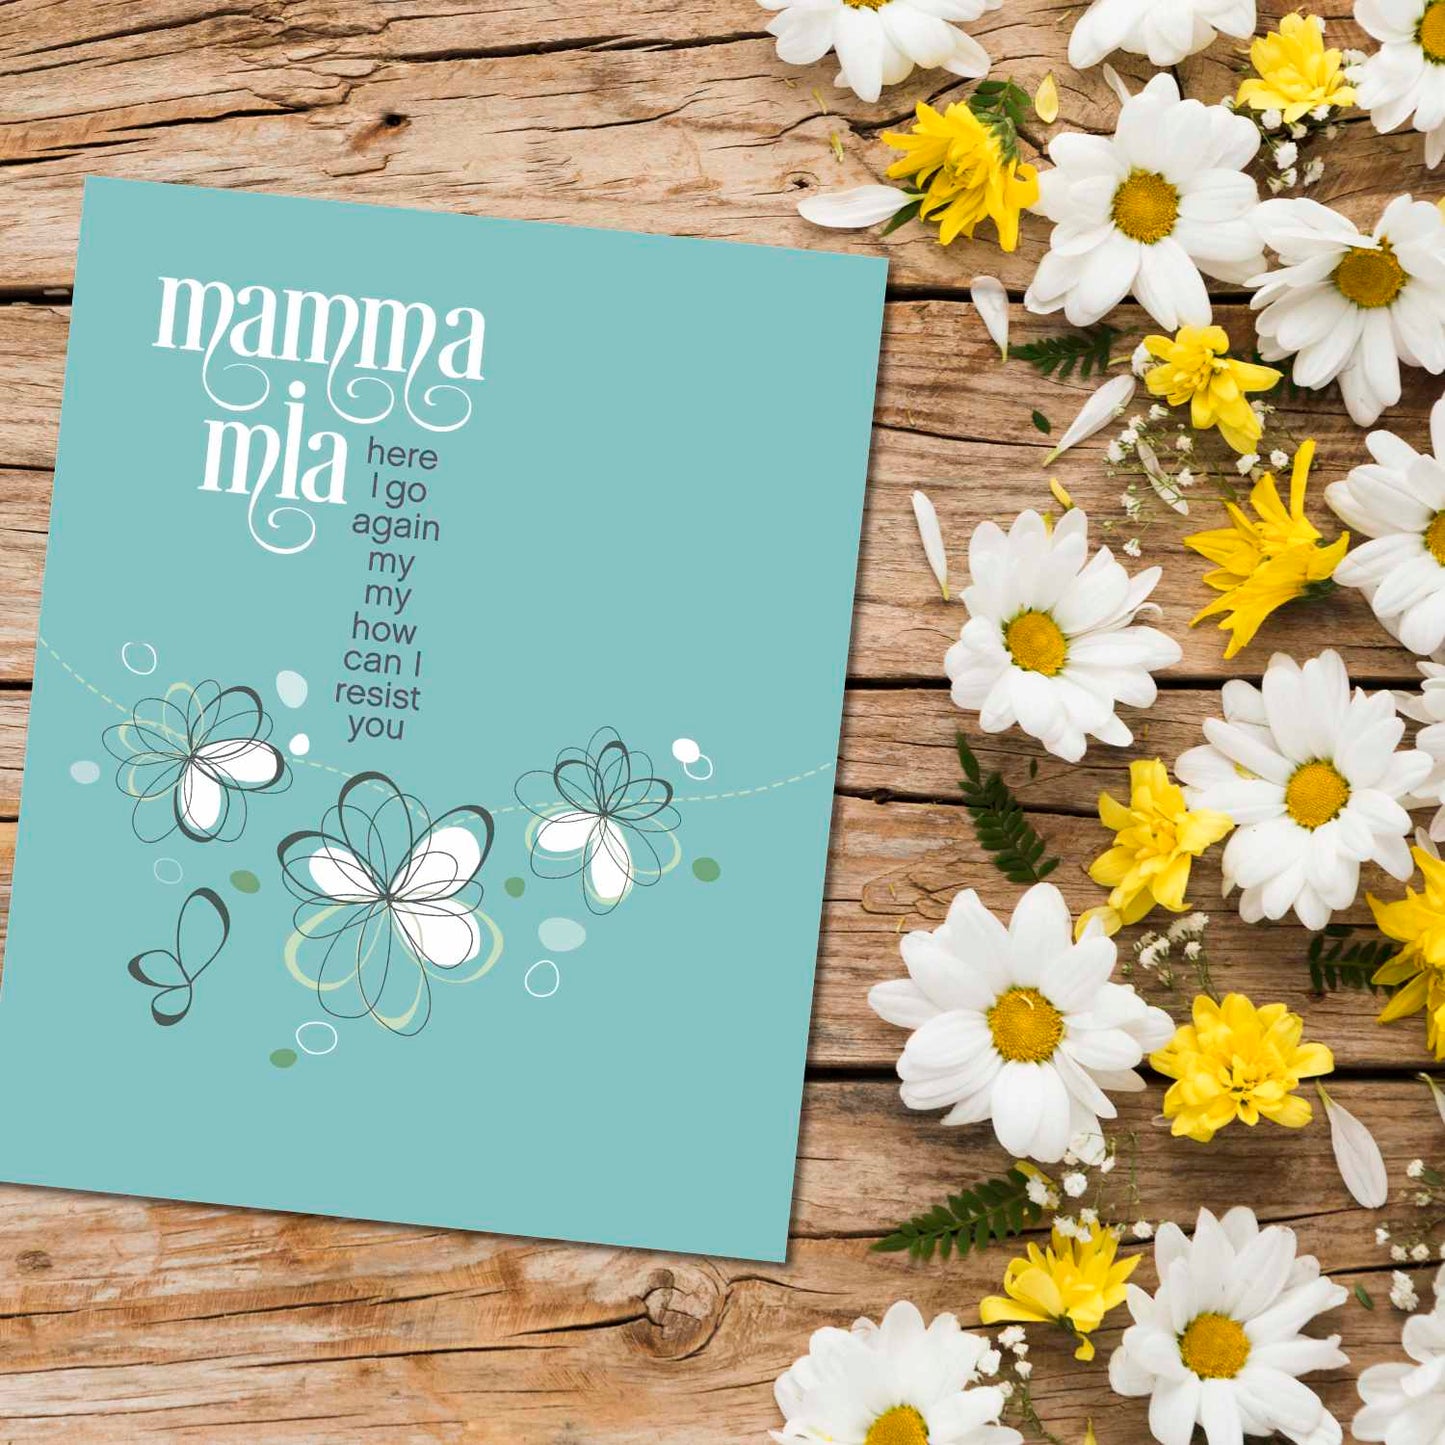 Mamma Mia by ABBA - Song Lyric Pop Music Wall Art Print Song Lyrics Art Song Lyrics Art 8x10 Unframed Print 